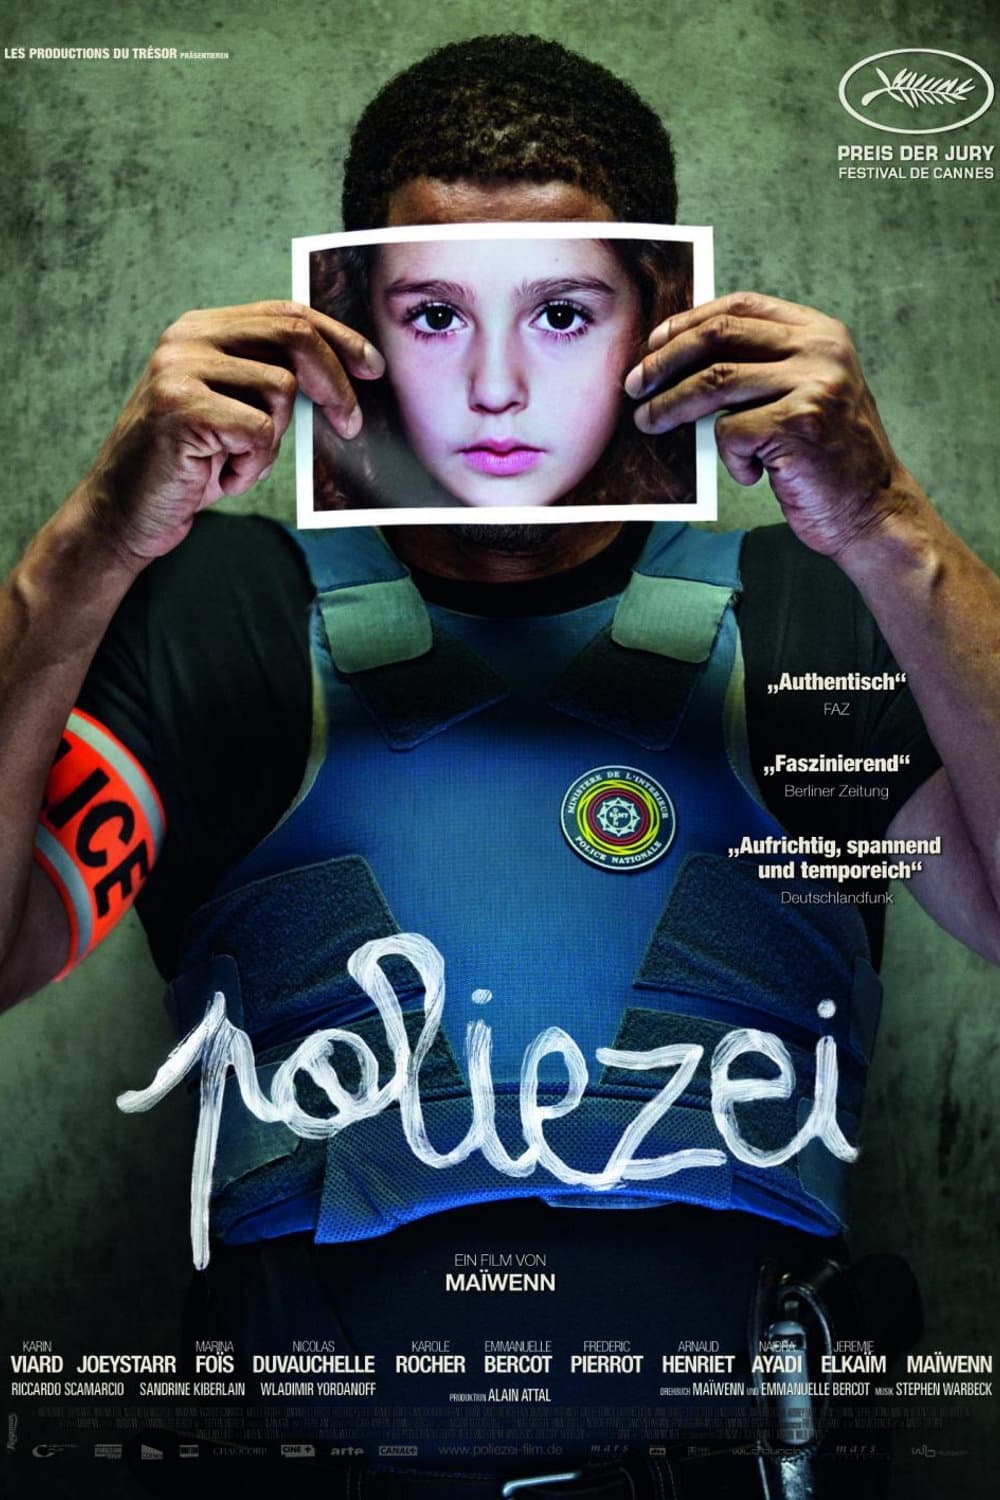 Polisse (2011)